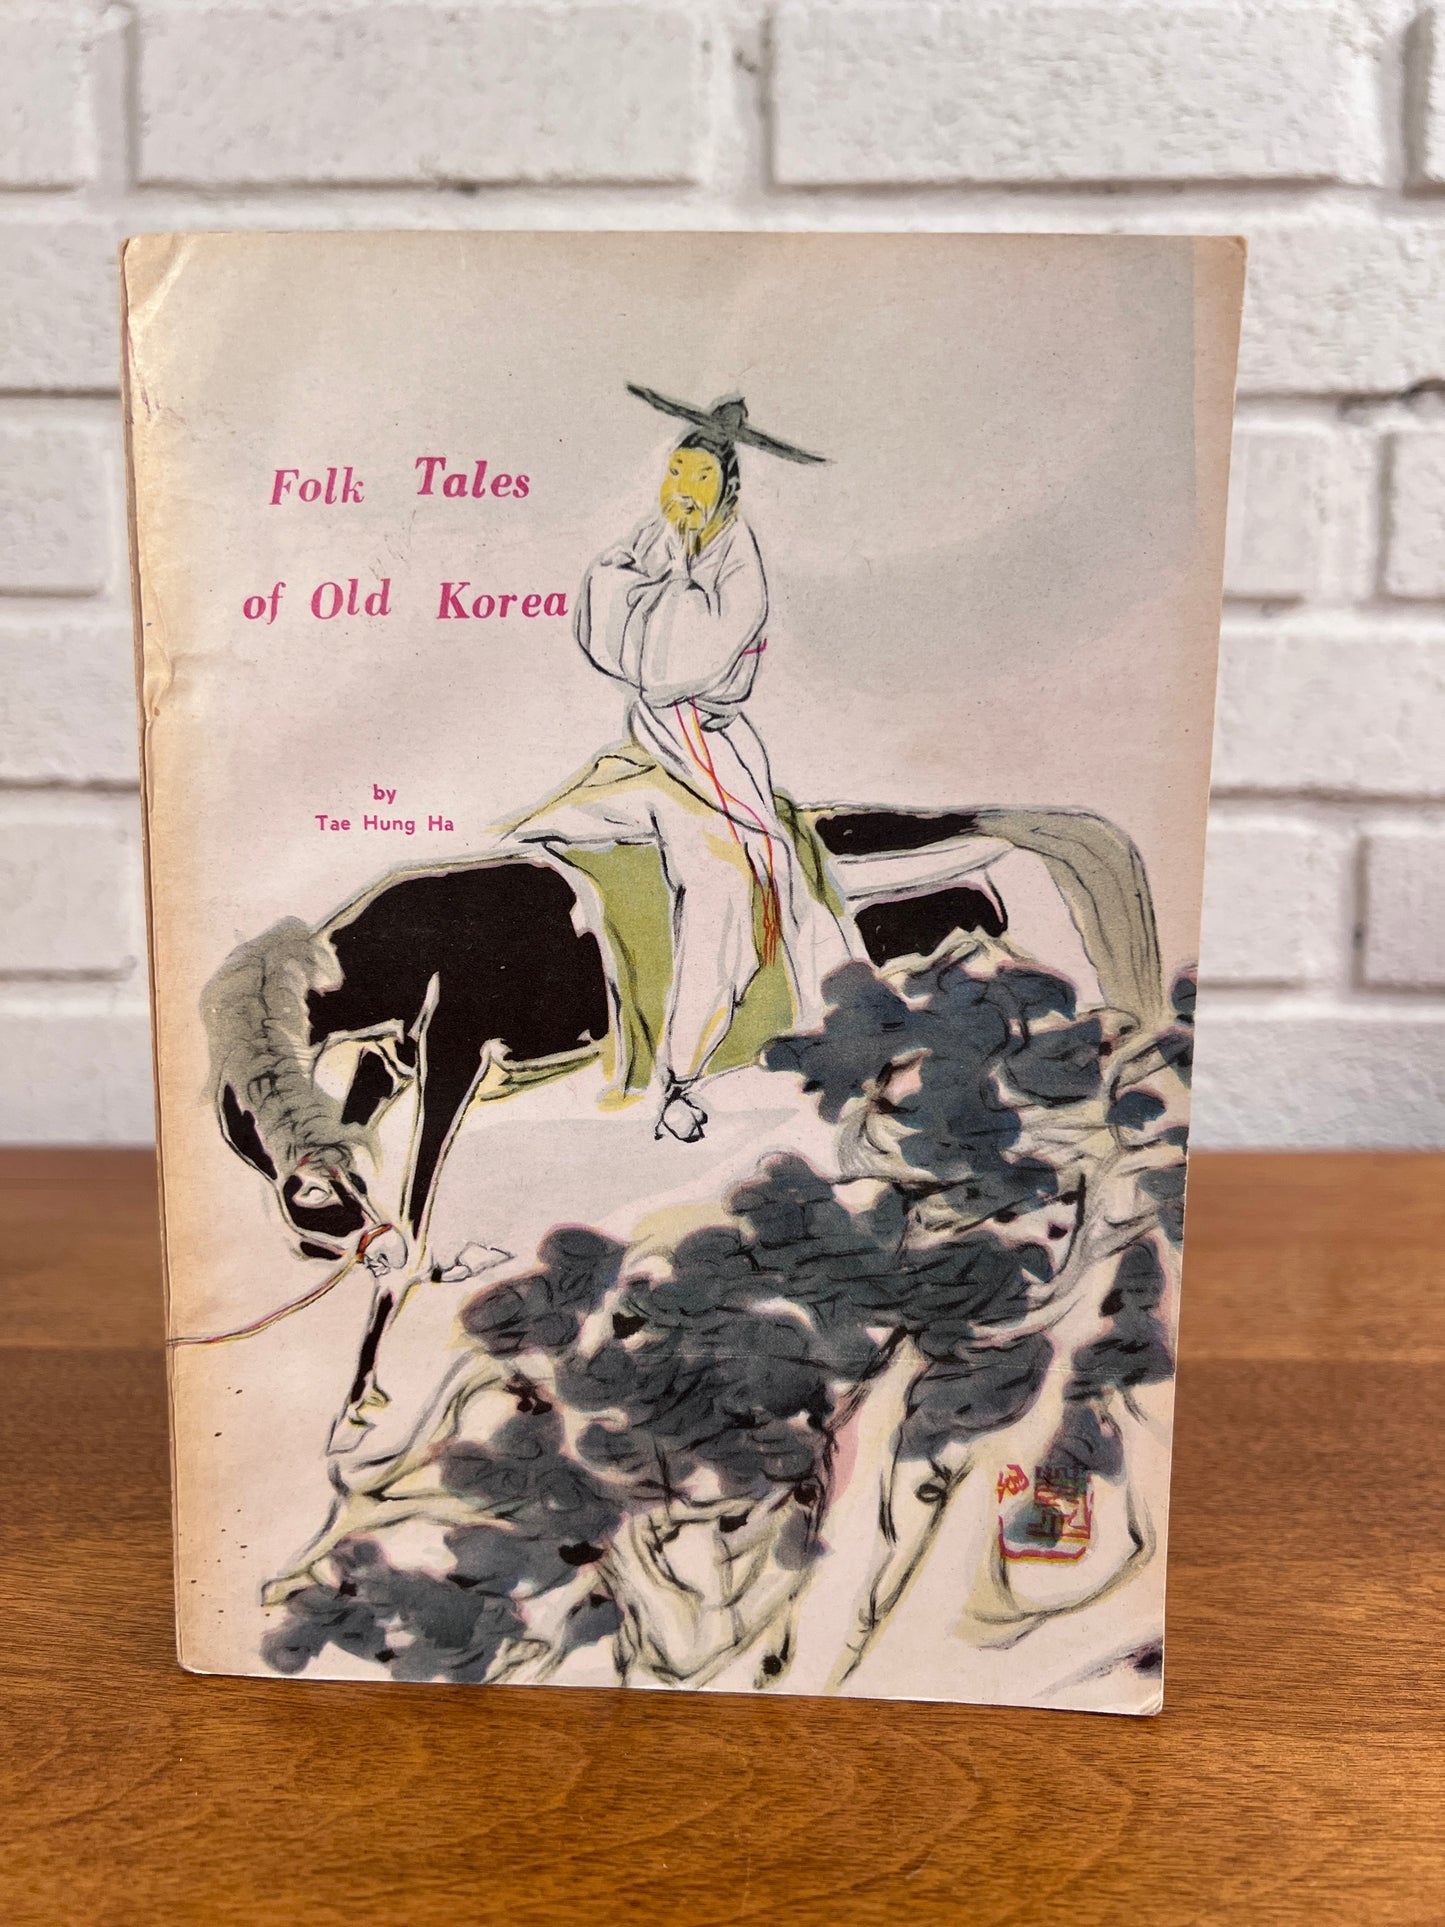 Folk Tales of Old Korea by Tae Hung Ha [Korean Cultural Series · Vol 6 · 1968]